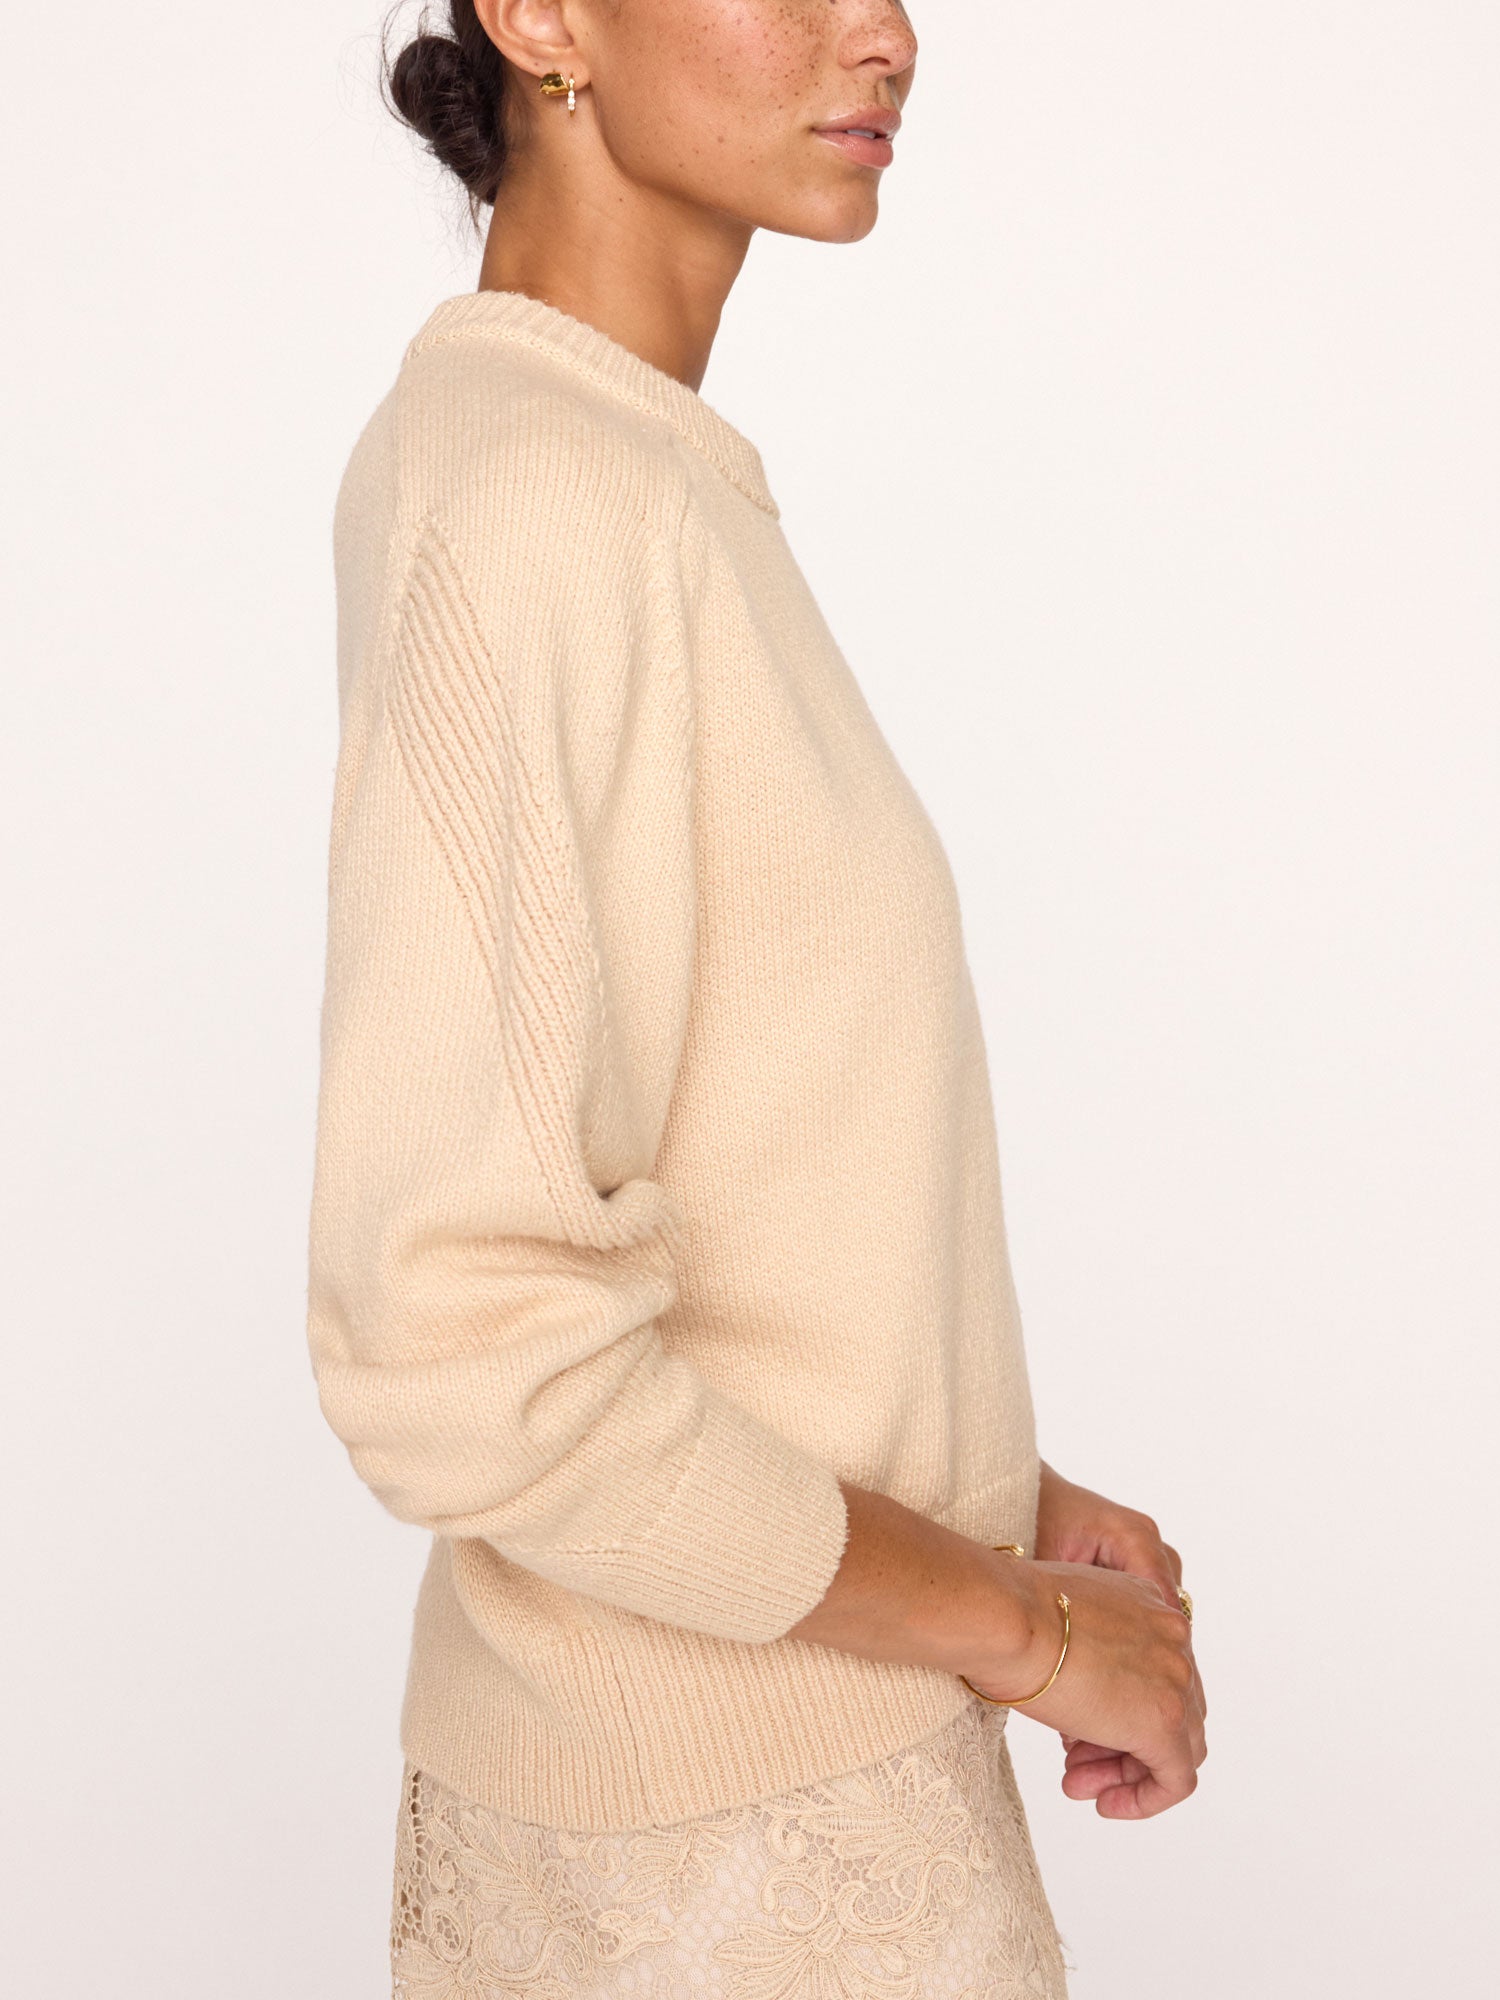 Pele tan crewneck sweater side view